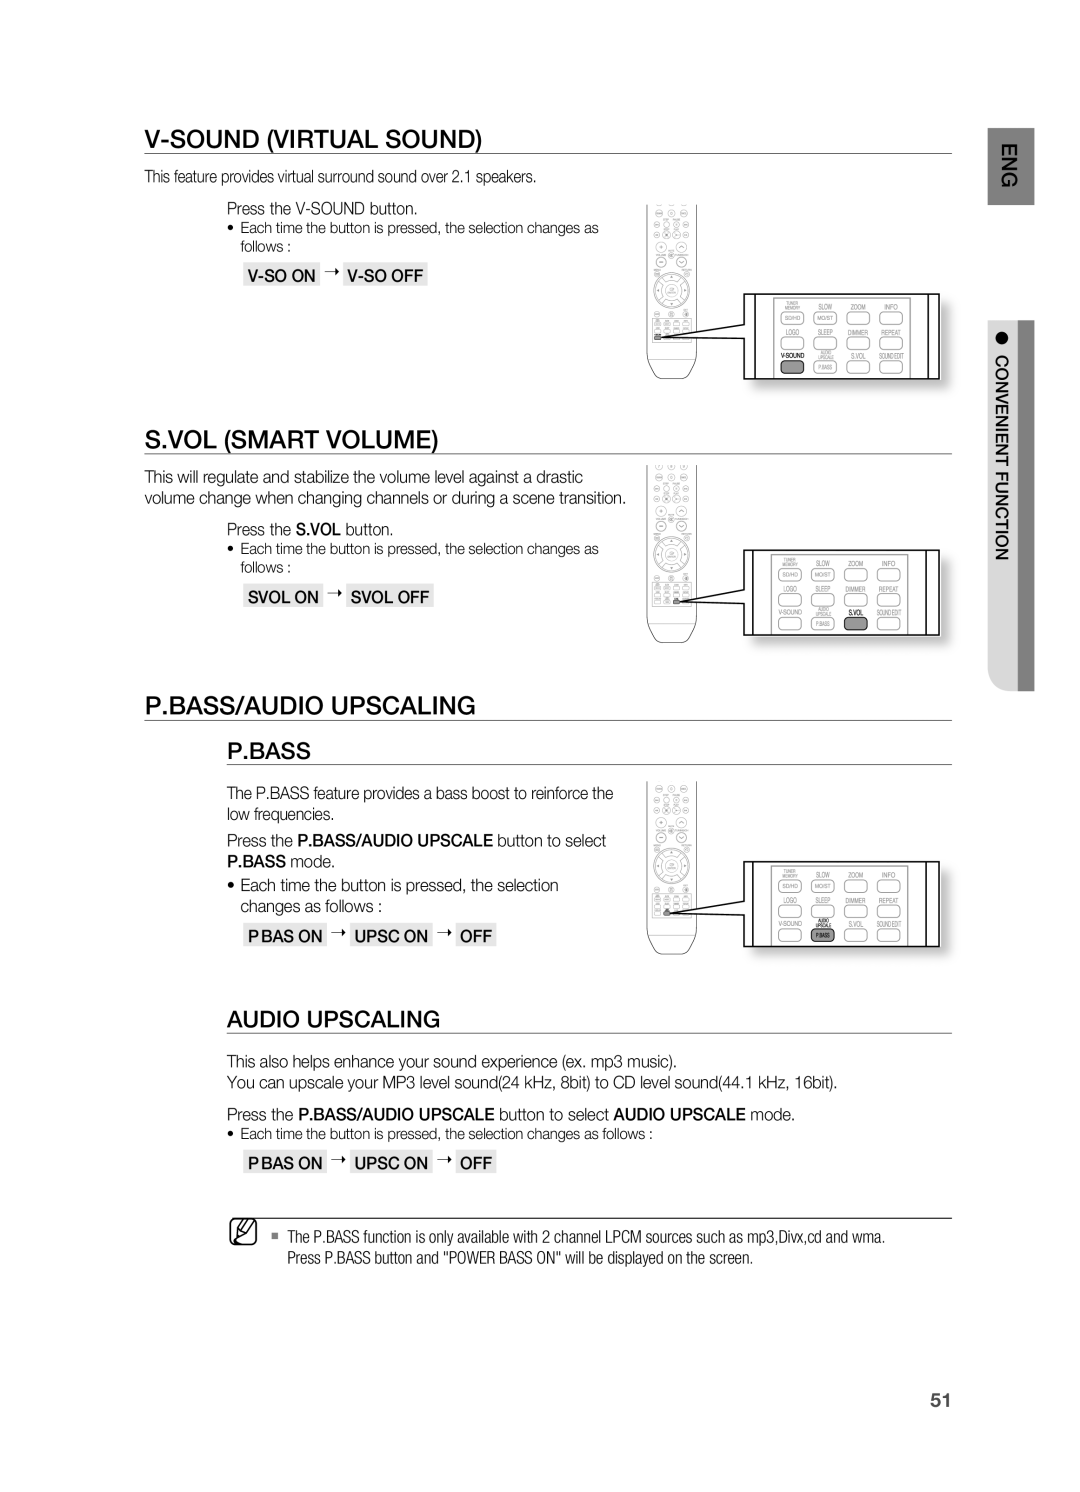 Sony HT-X810 user manual V-SOUND VIrTUAl SOUND, S.VOl SMArT VOlUME, P.BASS/AUDIO UPSCAlING, P.Bass 